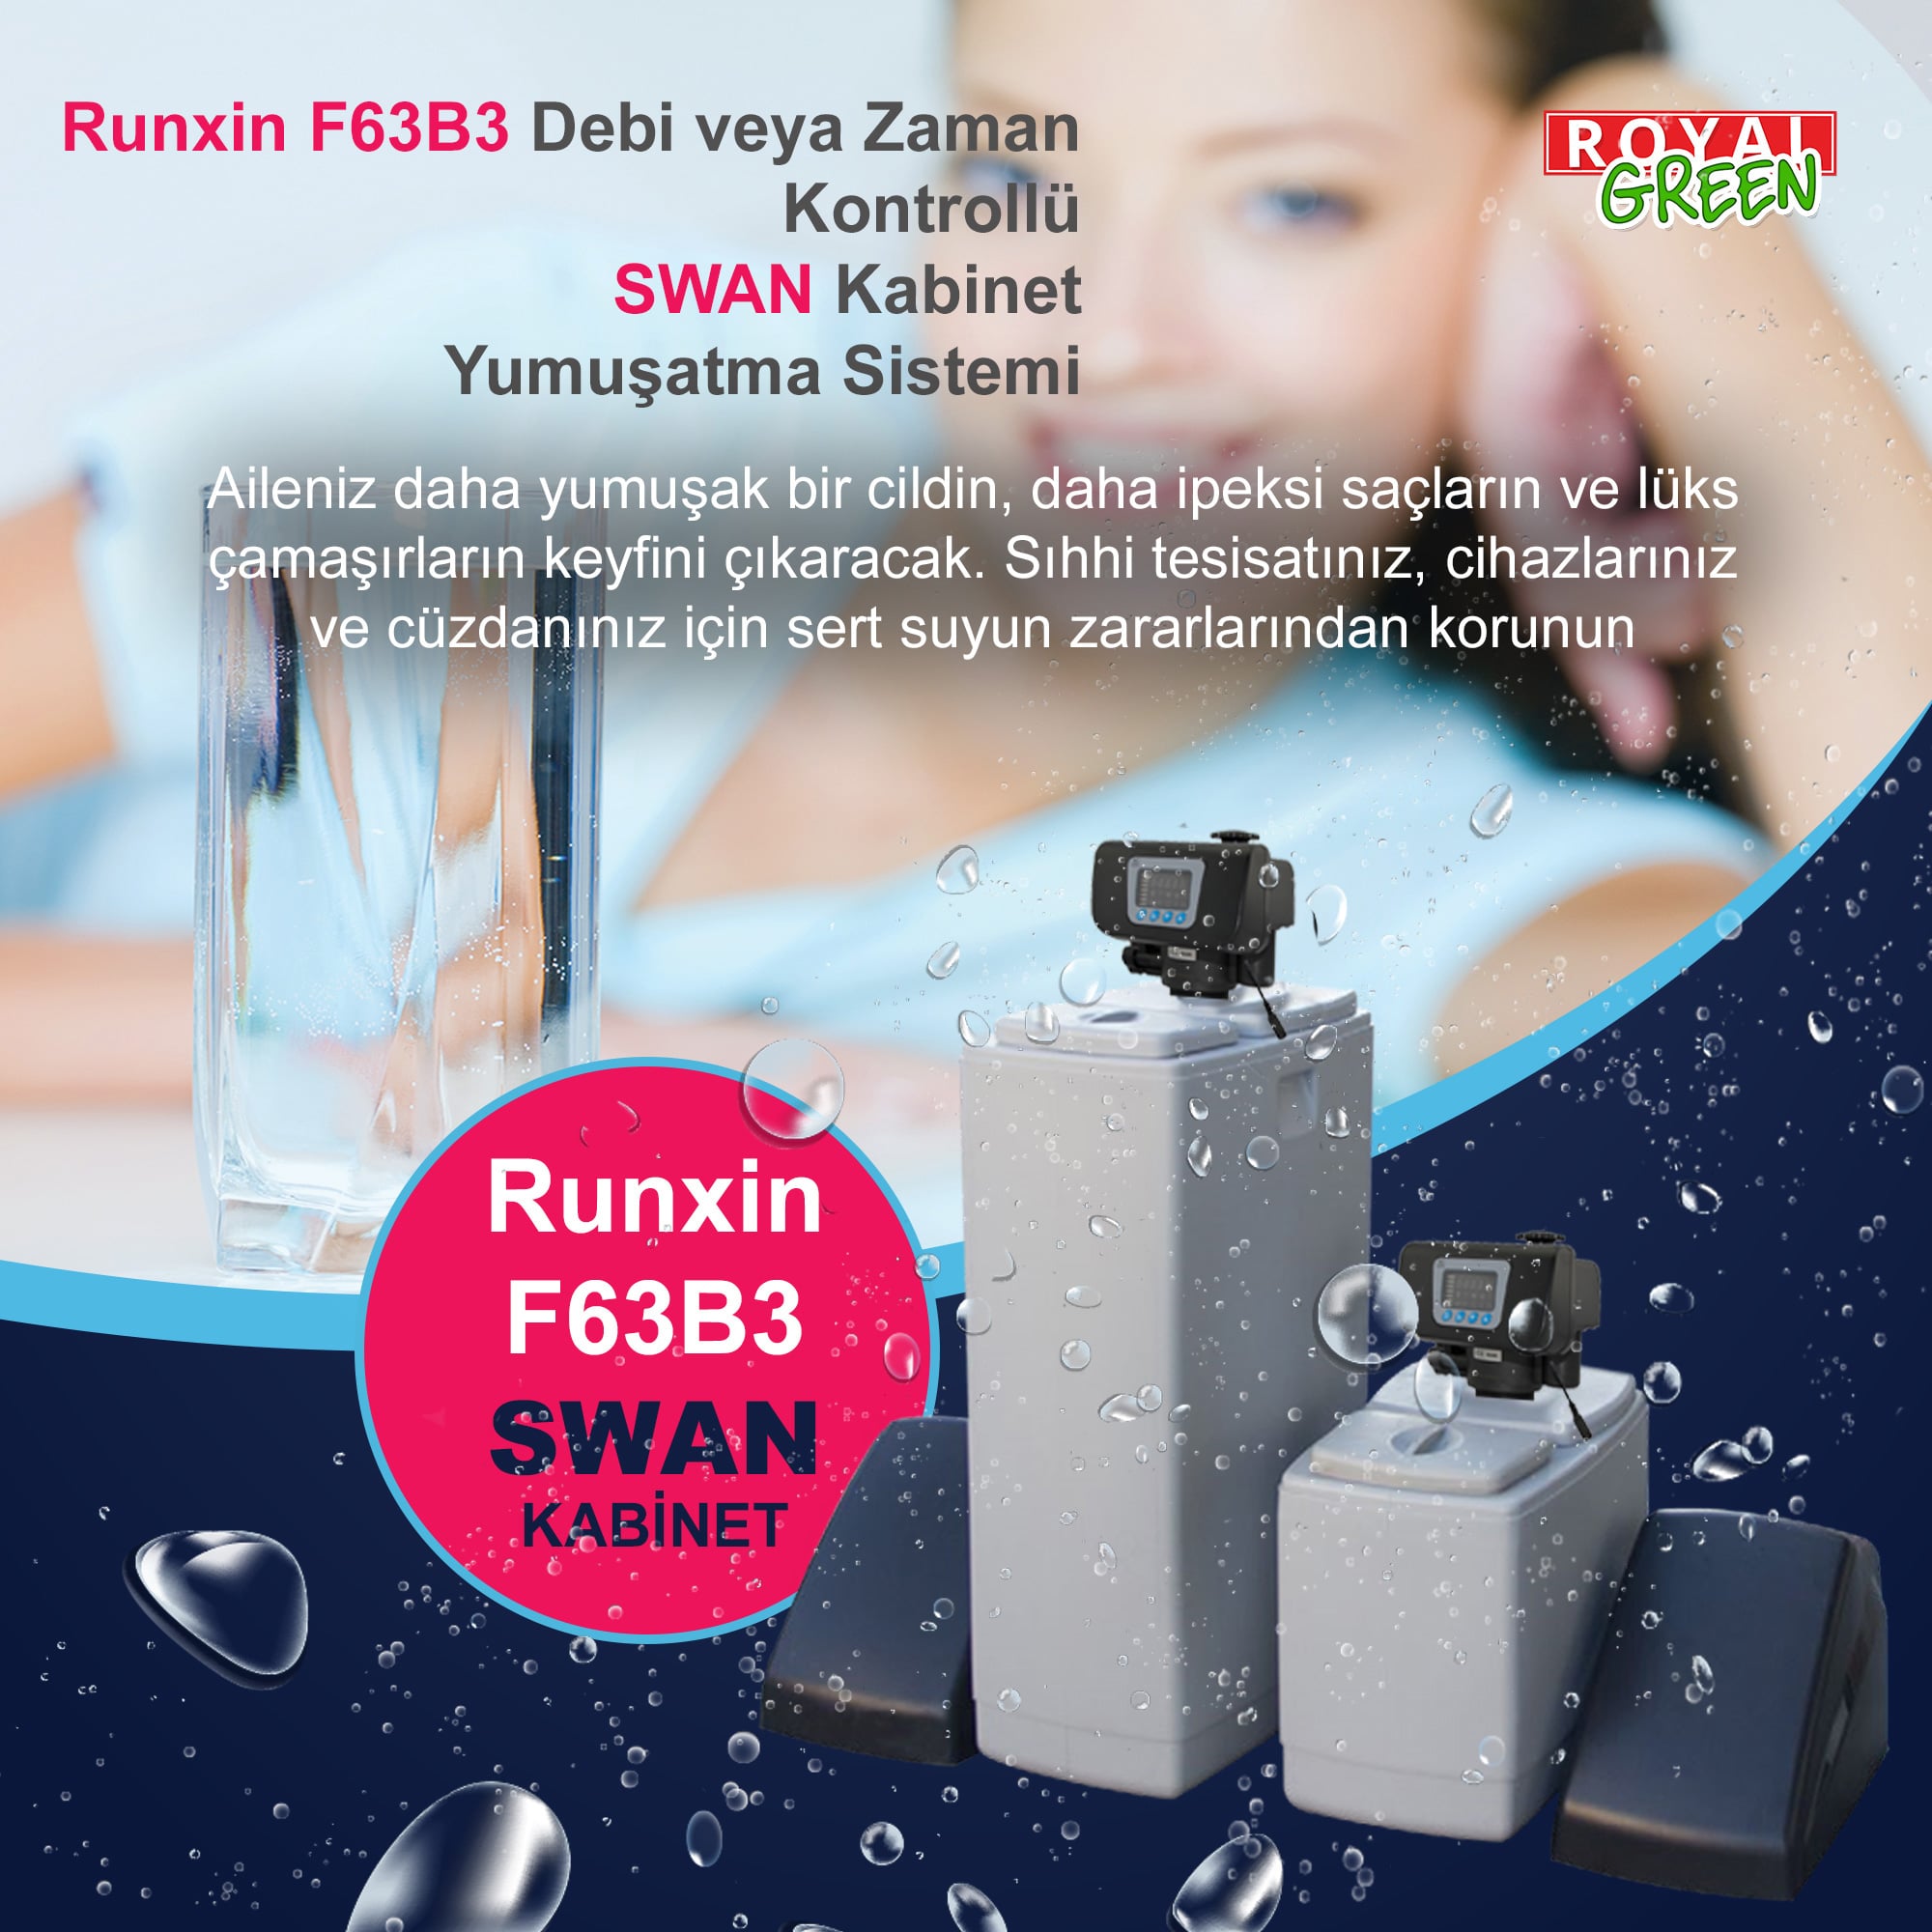 Runxin F63B3 F70A Swan Kabinetli Yumusatma Sistemi Banner min